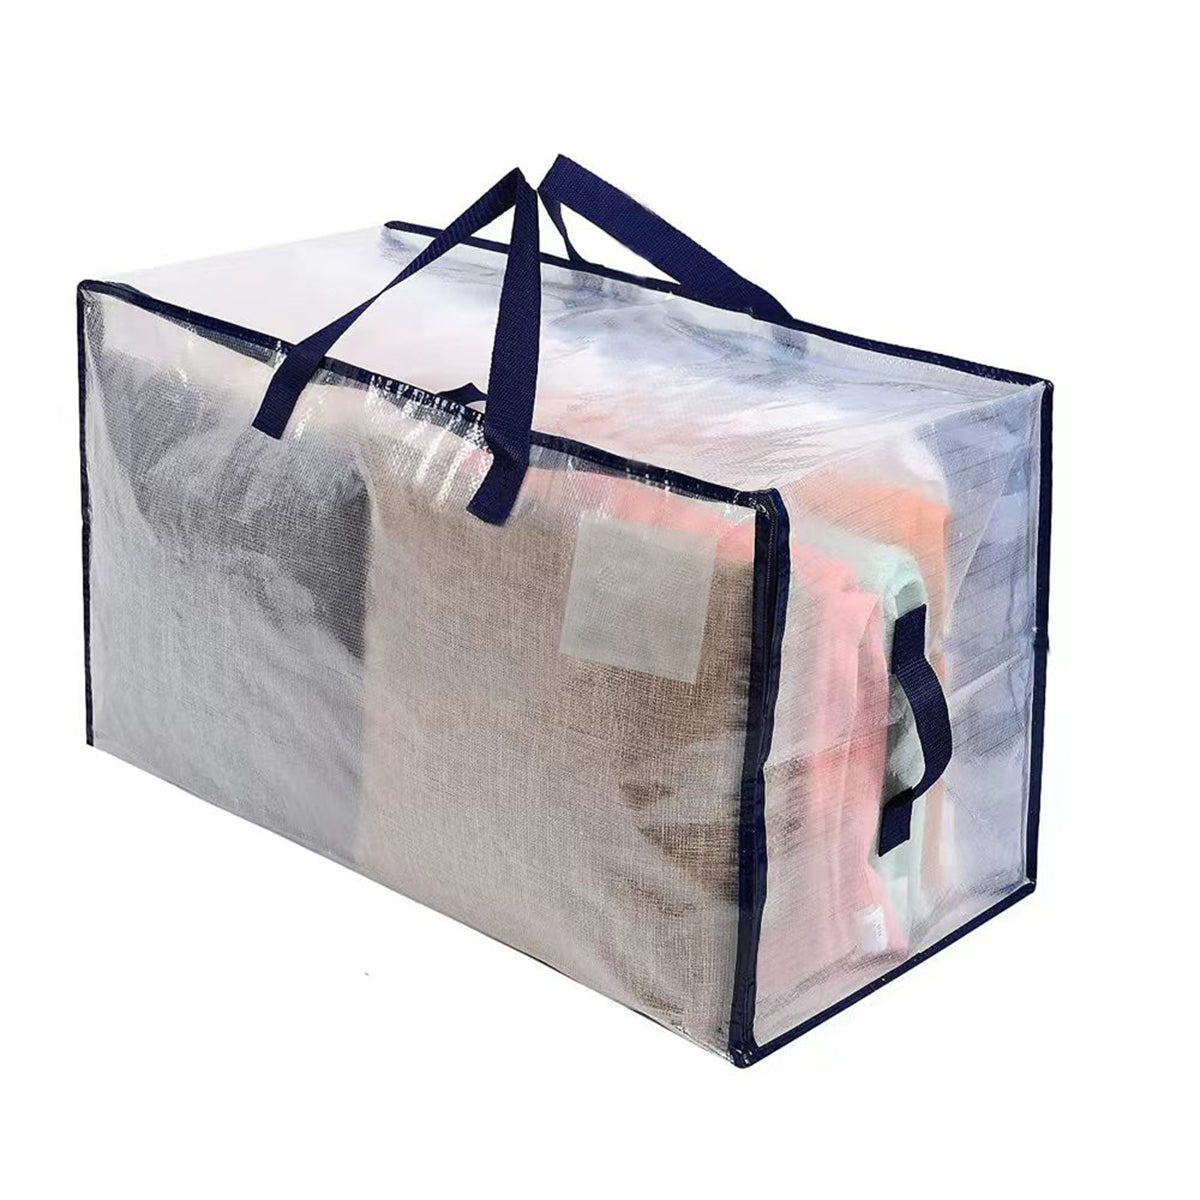 Comforter Storage Bag with Sturdy Handles & Premium Dual Zipper for Clothes Blankets Quilt Duvet Bedding